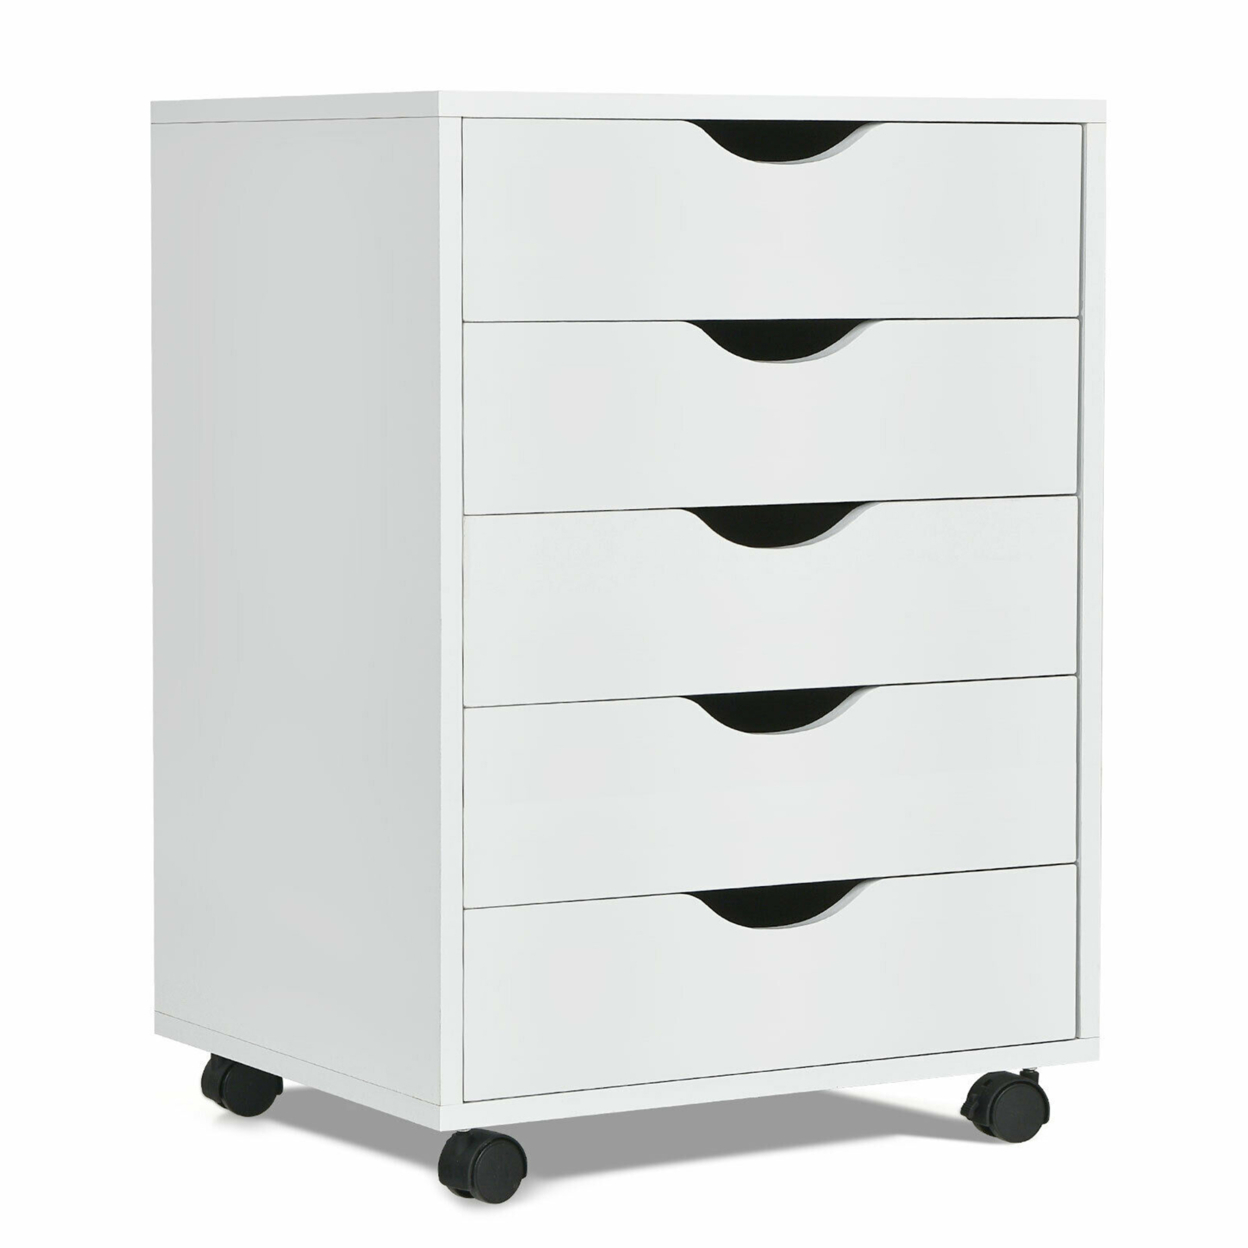 5 Drawer Dresser Storage Cabinet Chest W/Wheels For Home Office White